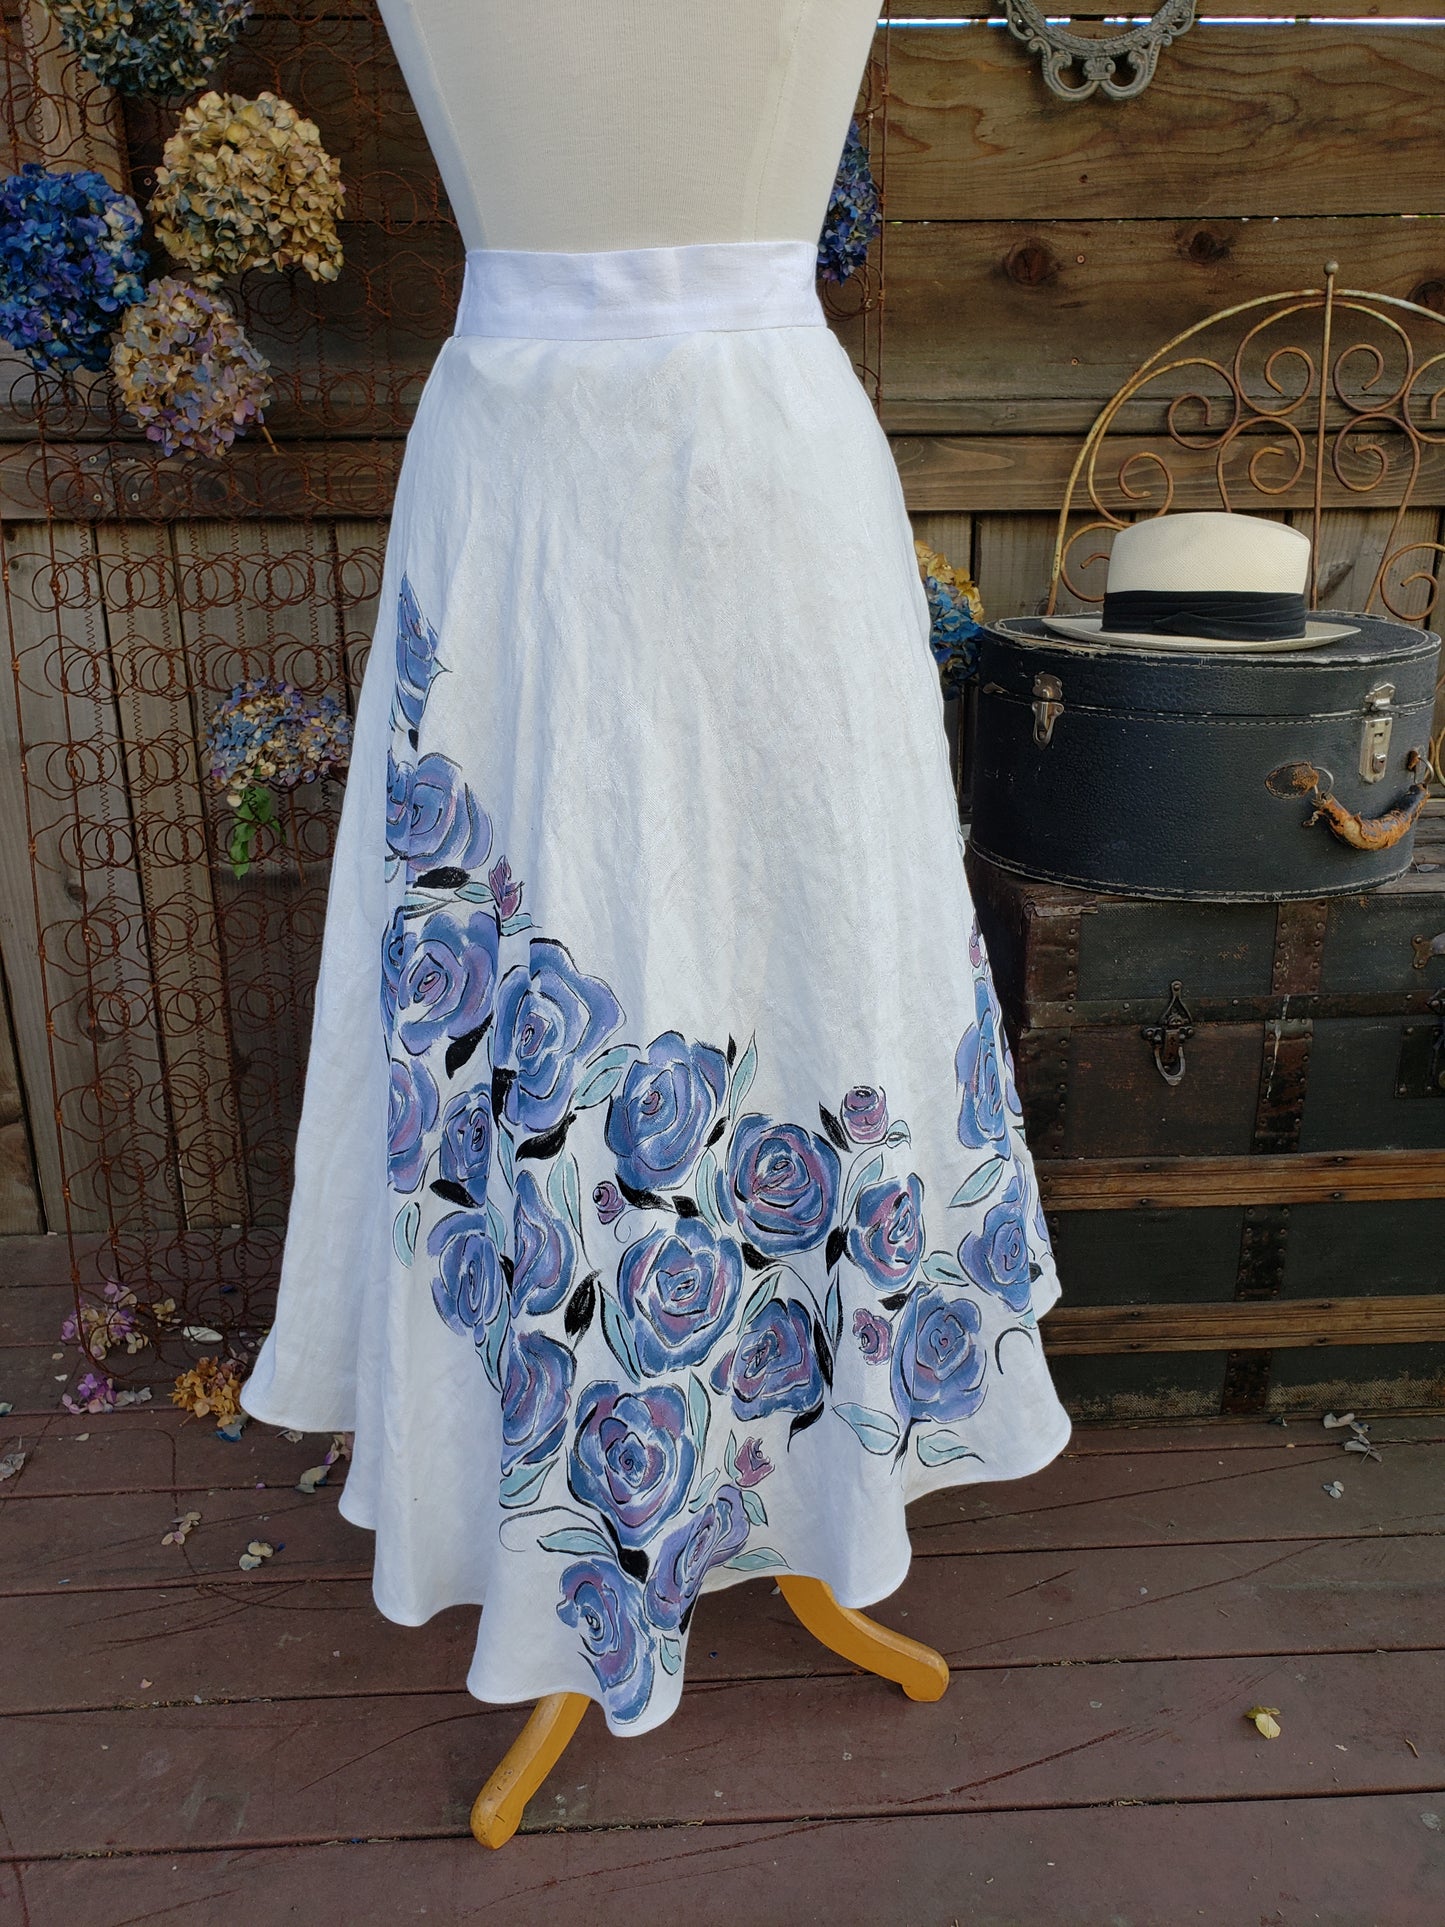 Handpainted black and blue rose skirt